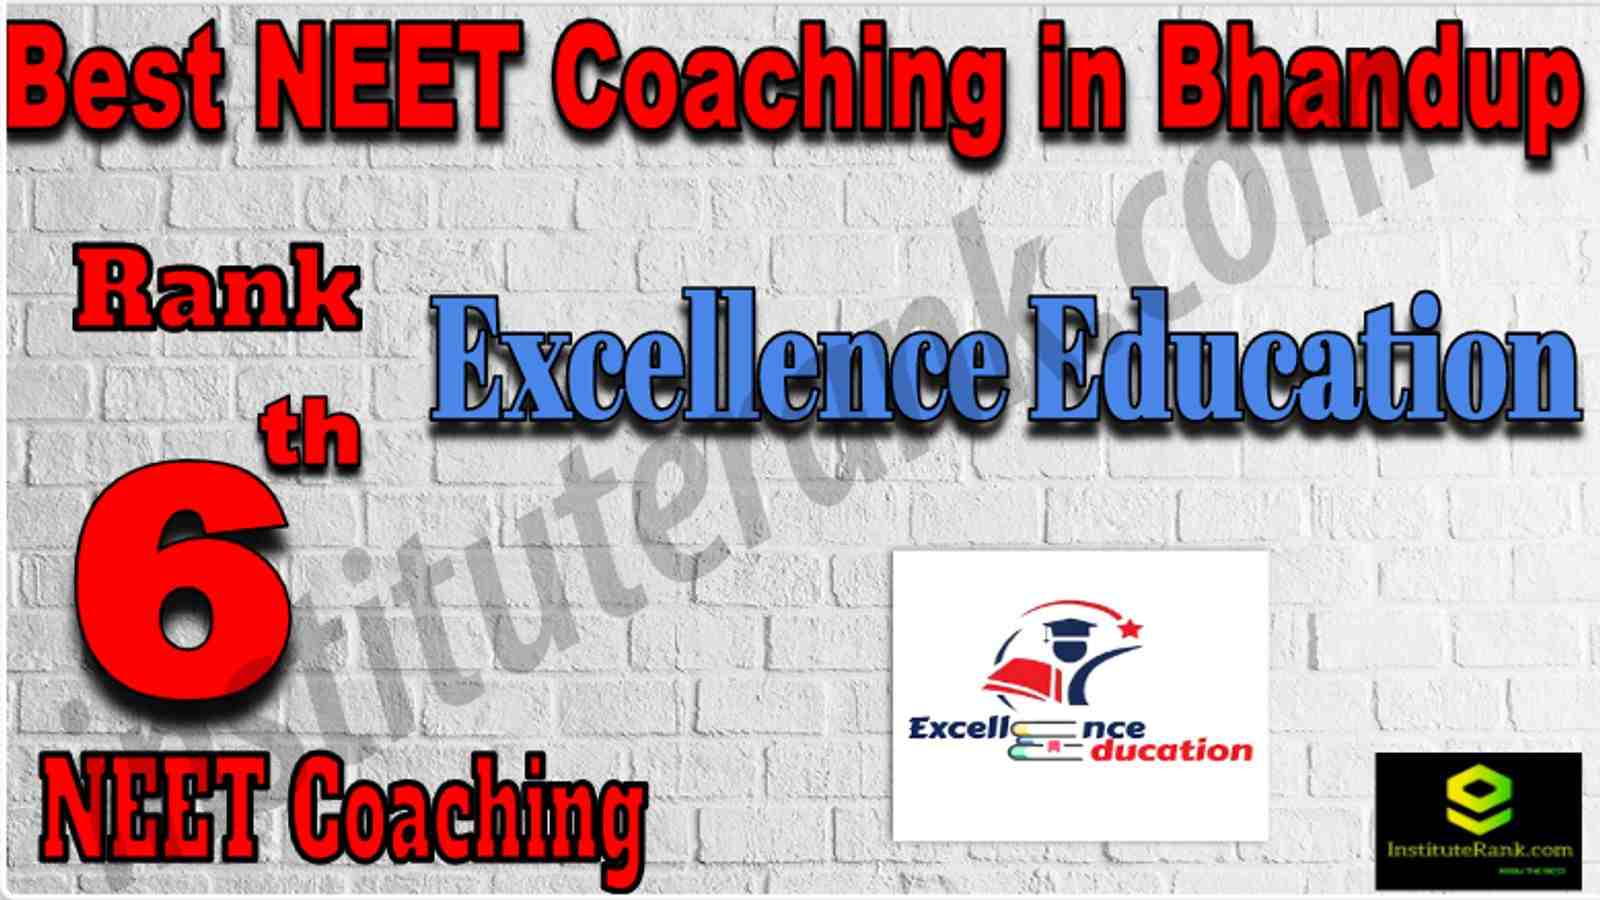 Rank 6 Best NEET Coaching in Bhandup